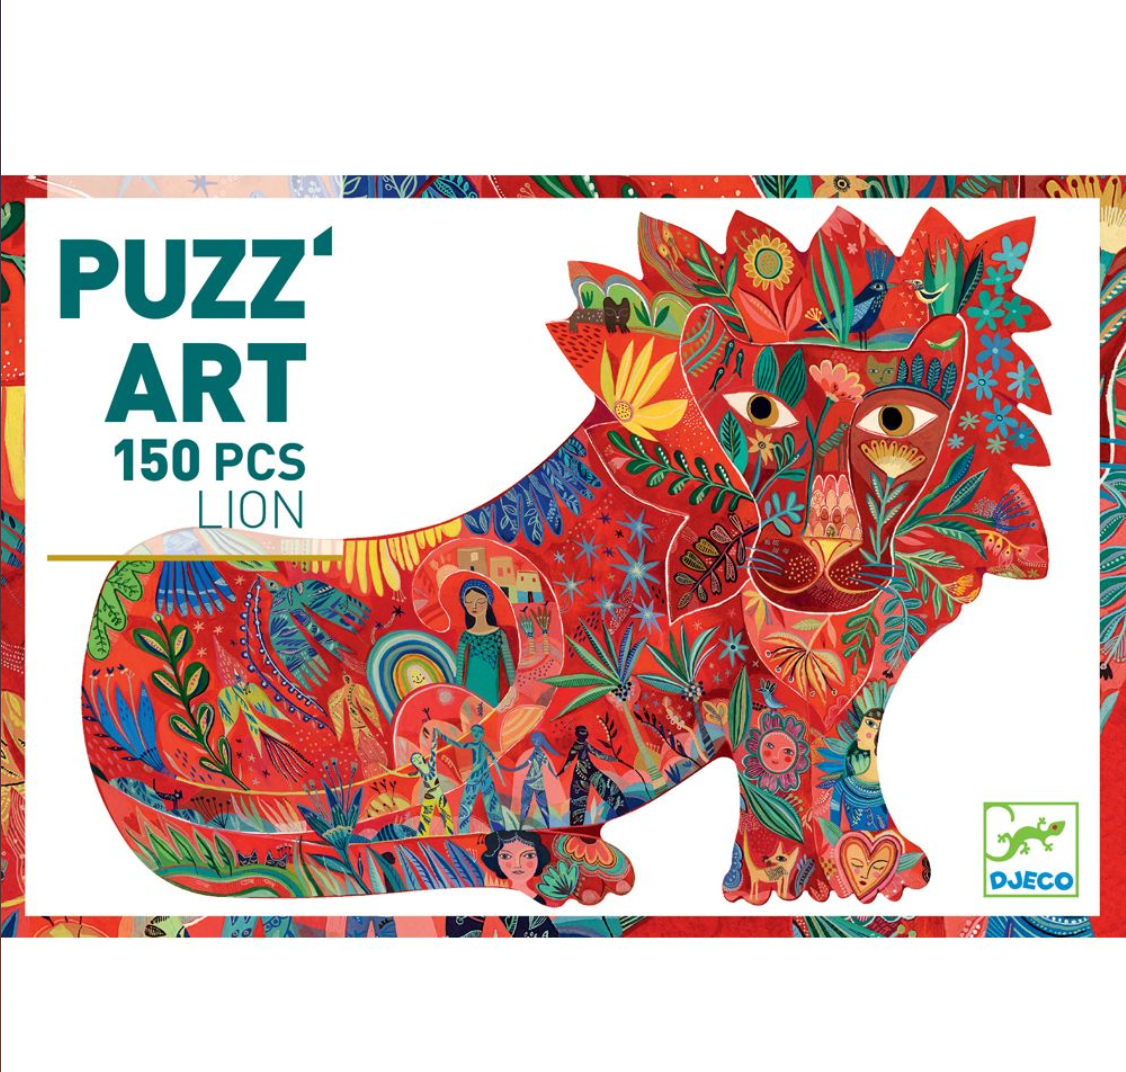 Djeco  Puzzle Art Lion Jigsaw 150 Pieces Age 6+